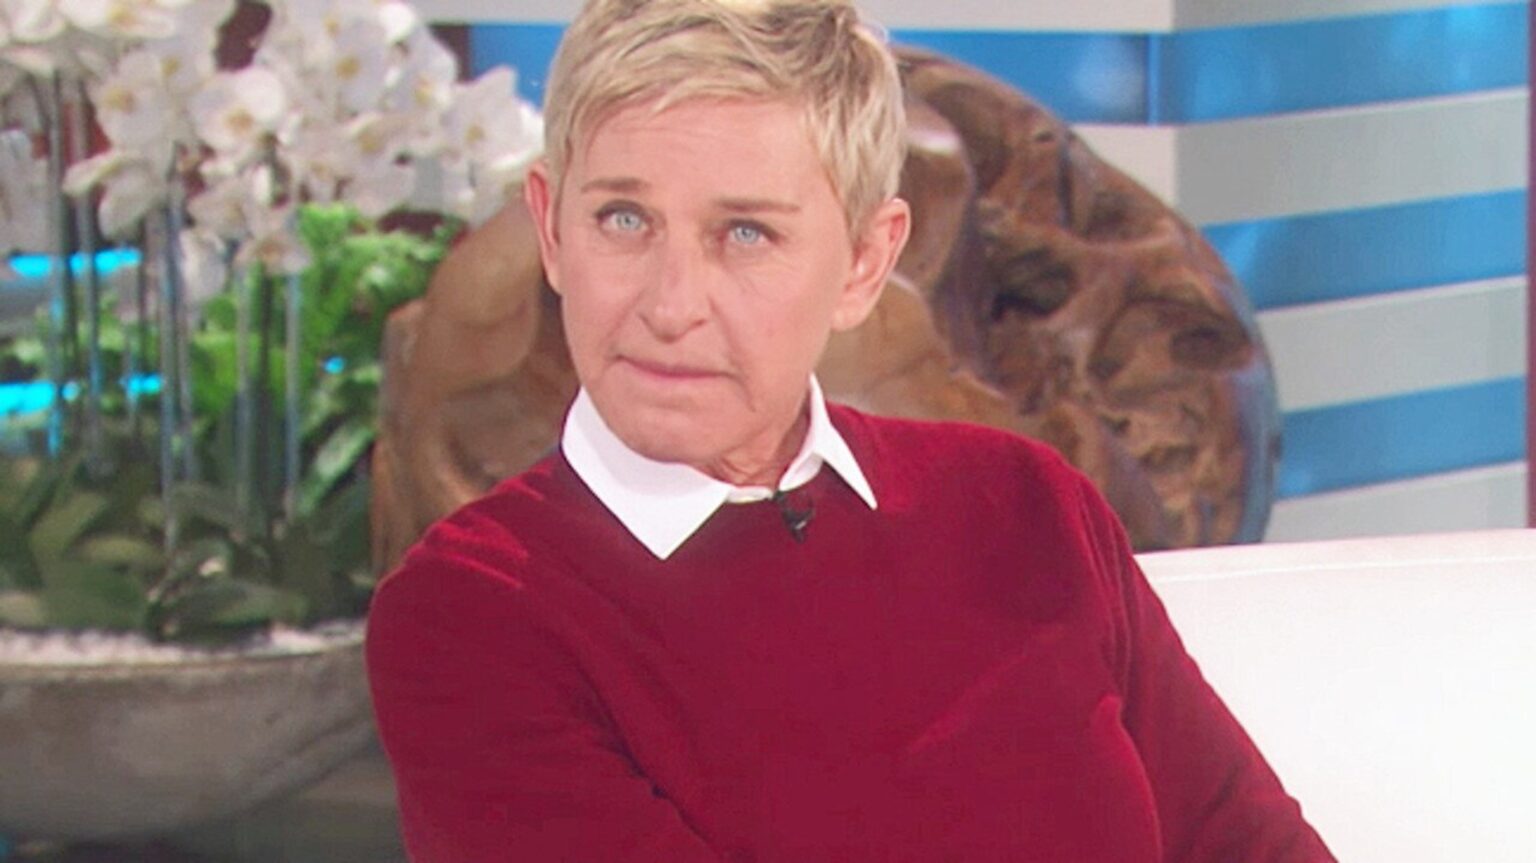 Ellen DeGeneres has been getting hit with an onslaught of bad publicity. Here's how it could impact 'The Ellen DeGeneres Show'.